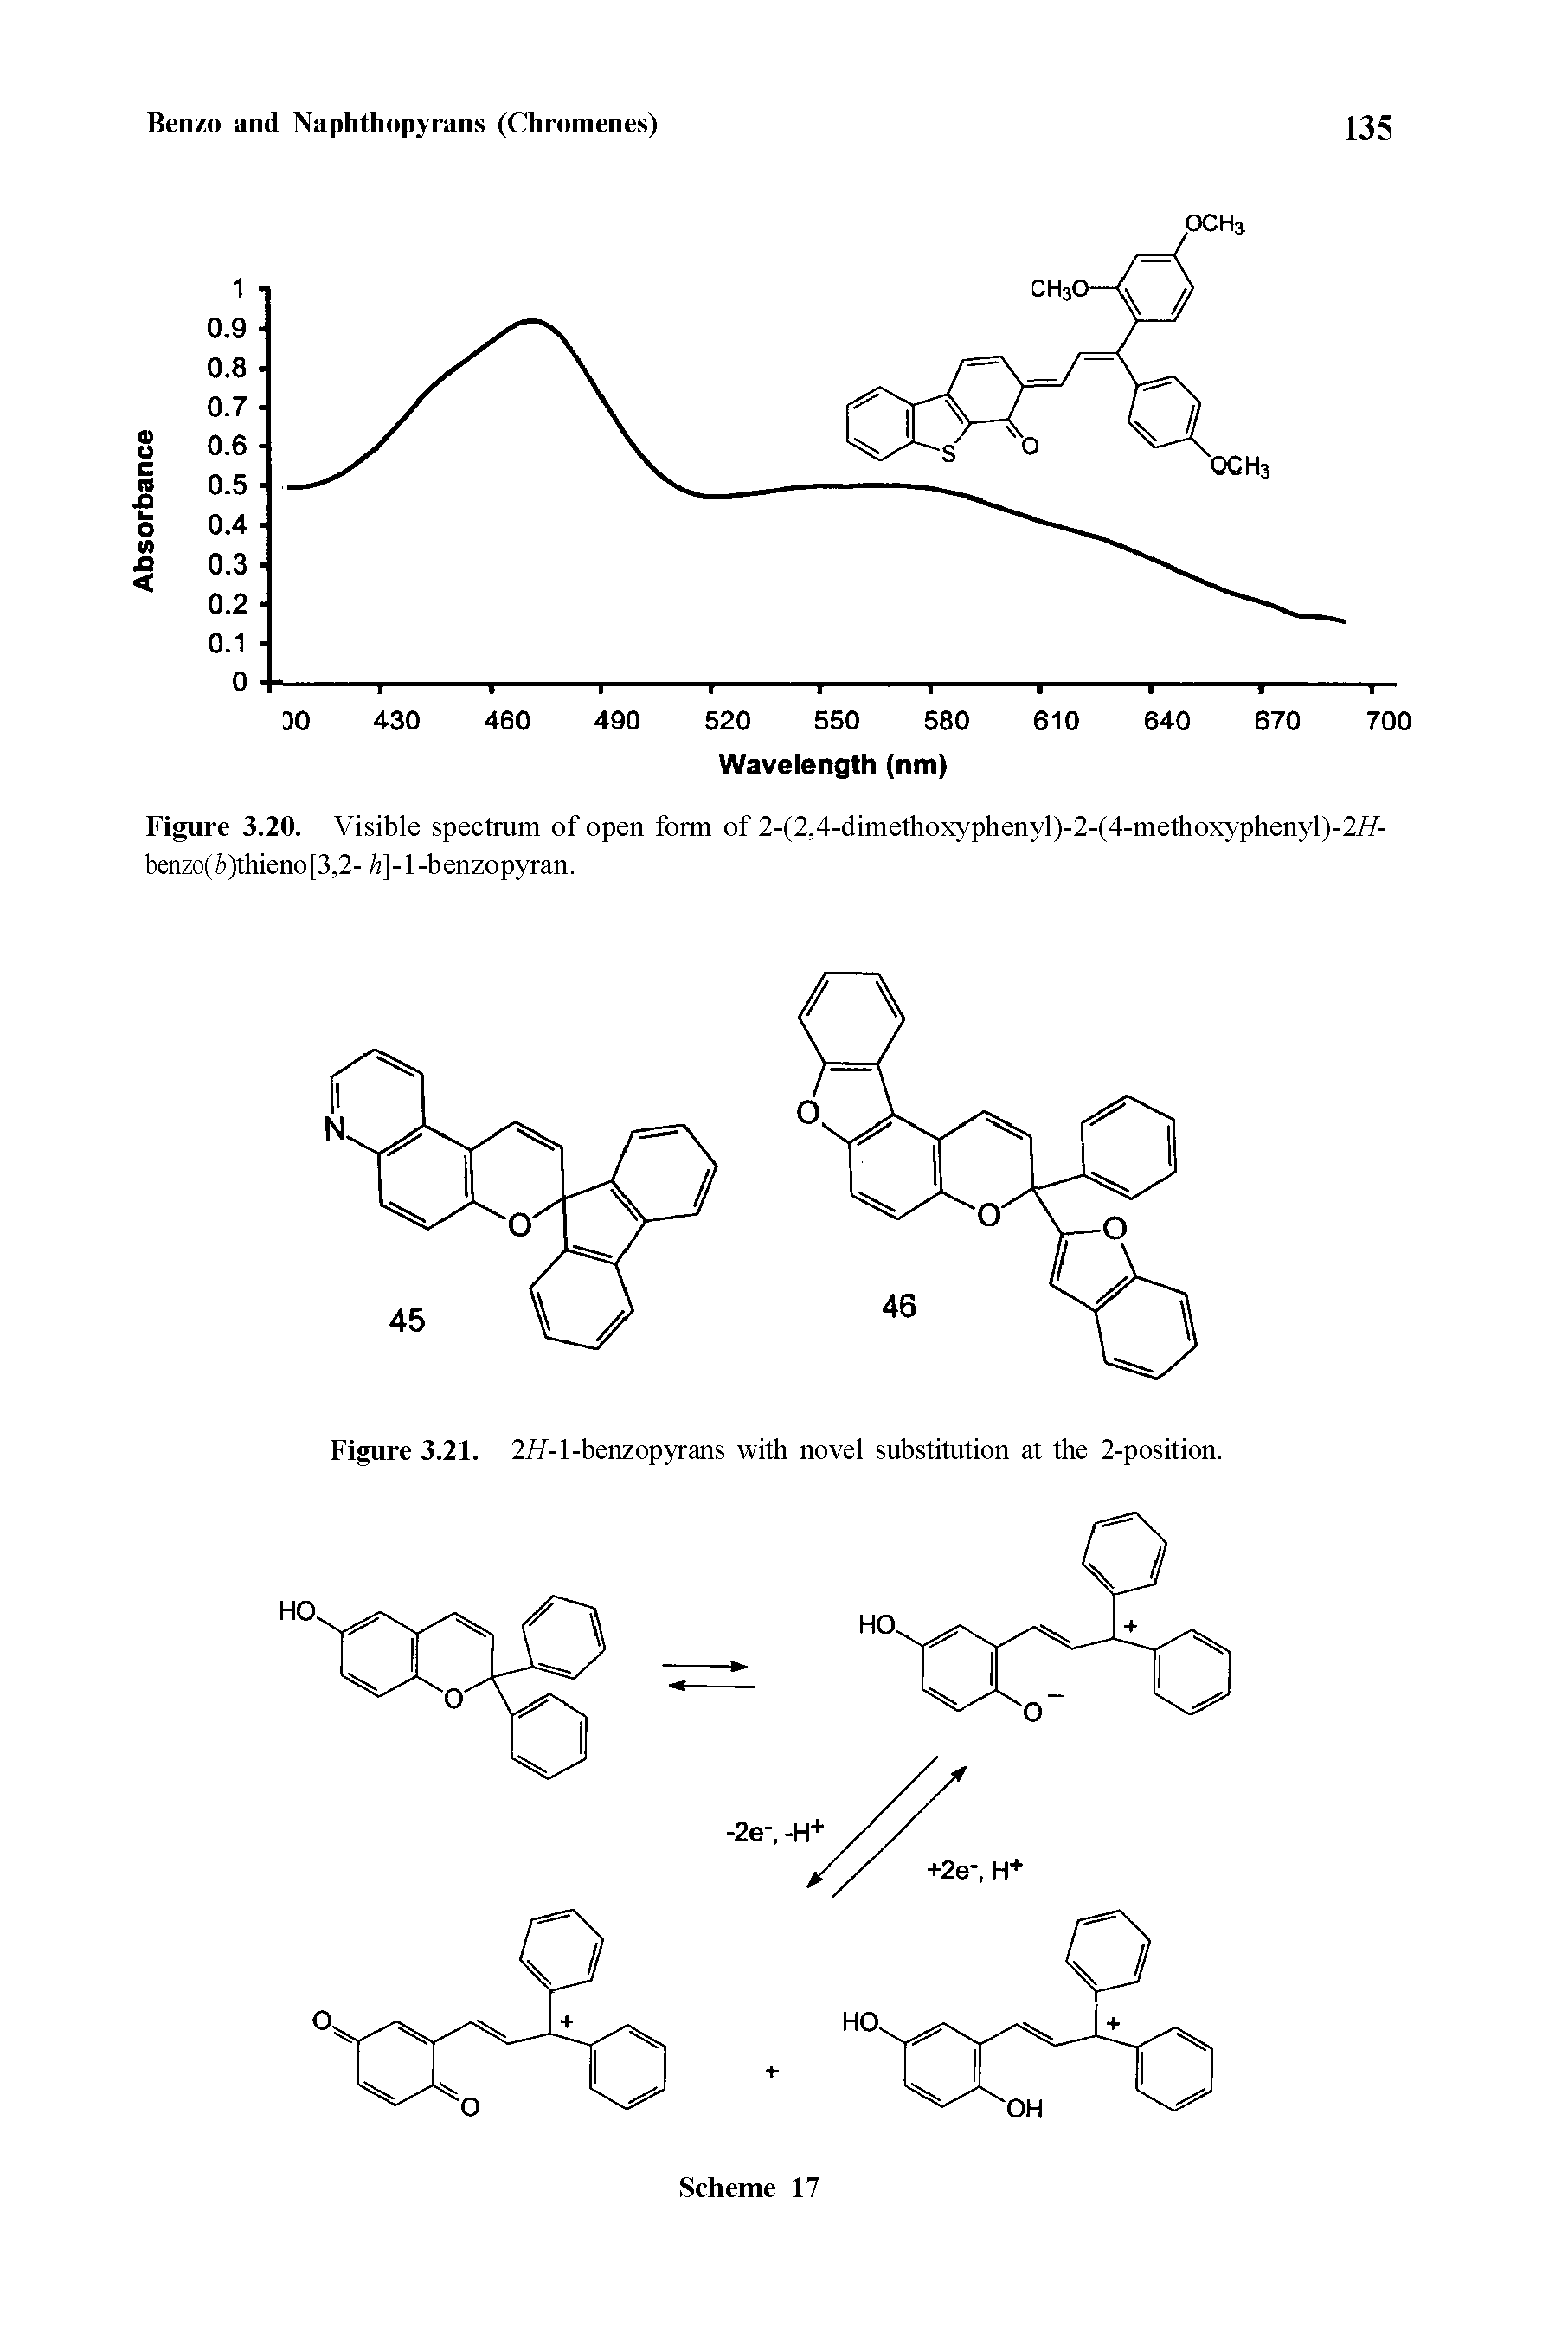 Figure 3.20. Visible spectrum of open form of 2-(2,4-dimethoxyphenyl)-2-(4-methoxyphenyl)-2//-benzo(fe)thieno[3,2- h -1 -benzopyran.